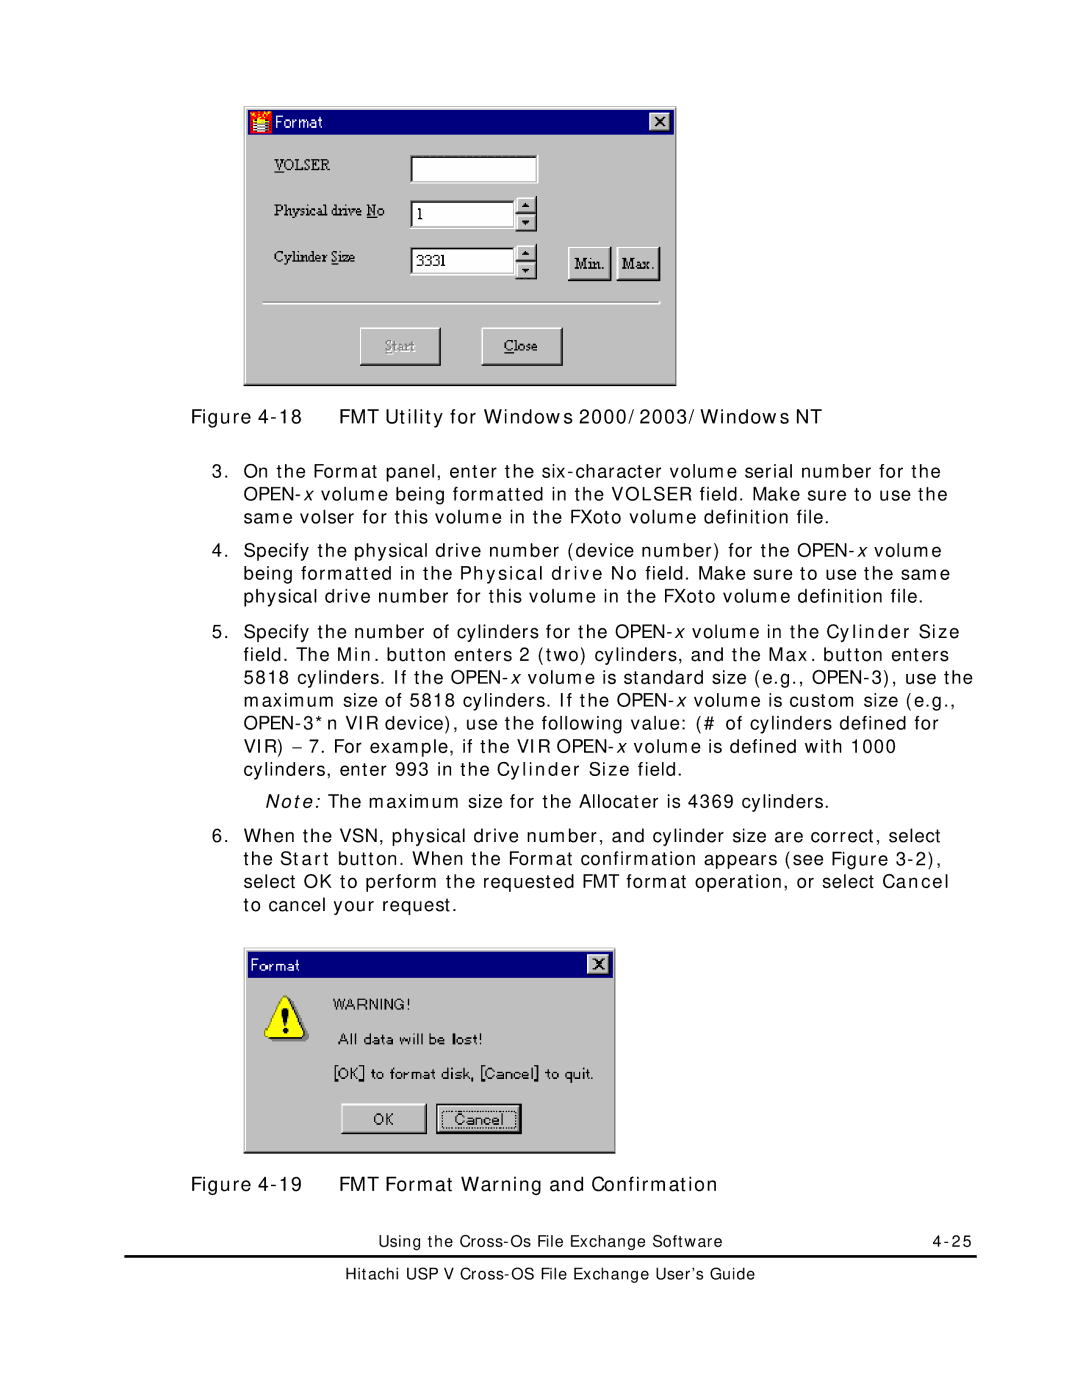 Hitachi MK-96RD647-01 manual FMT Utility for Windows 2000/2003/Windows NT 